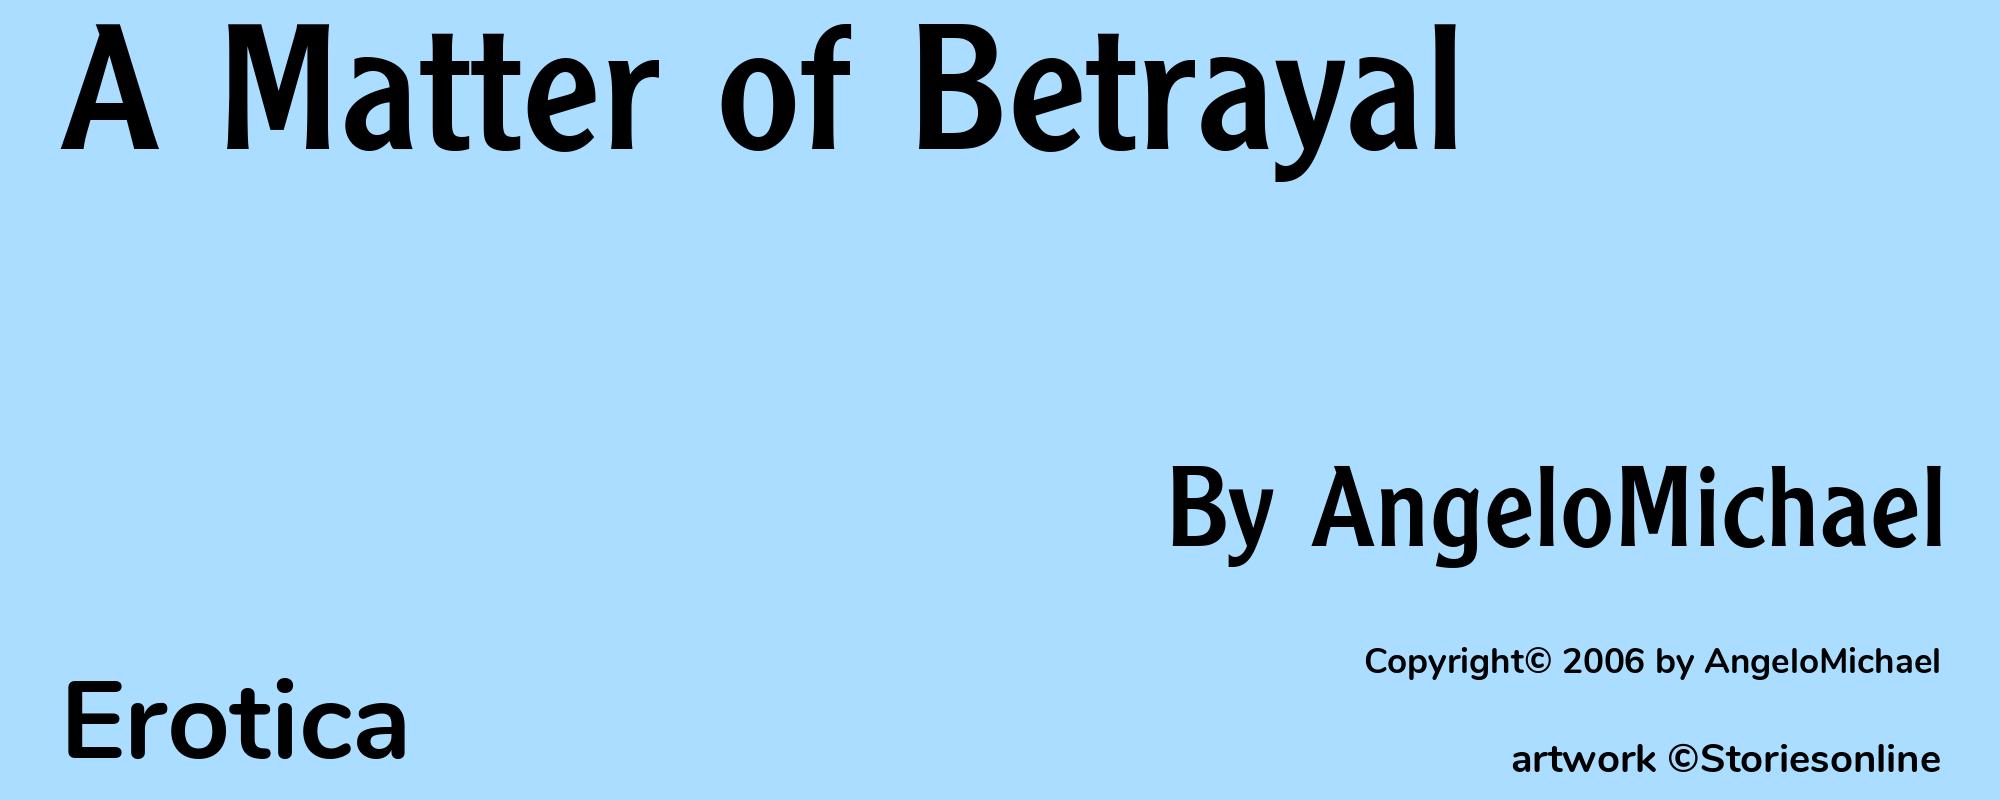 A Matter of Betrayal - Cover